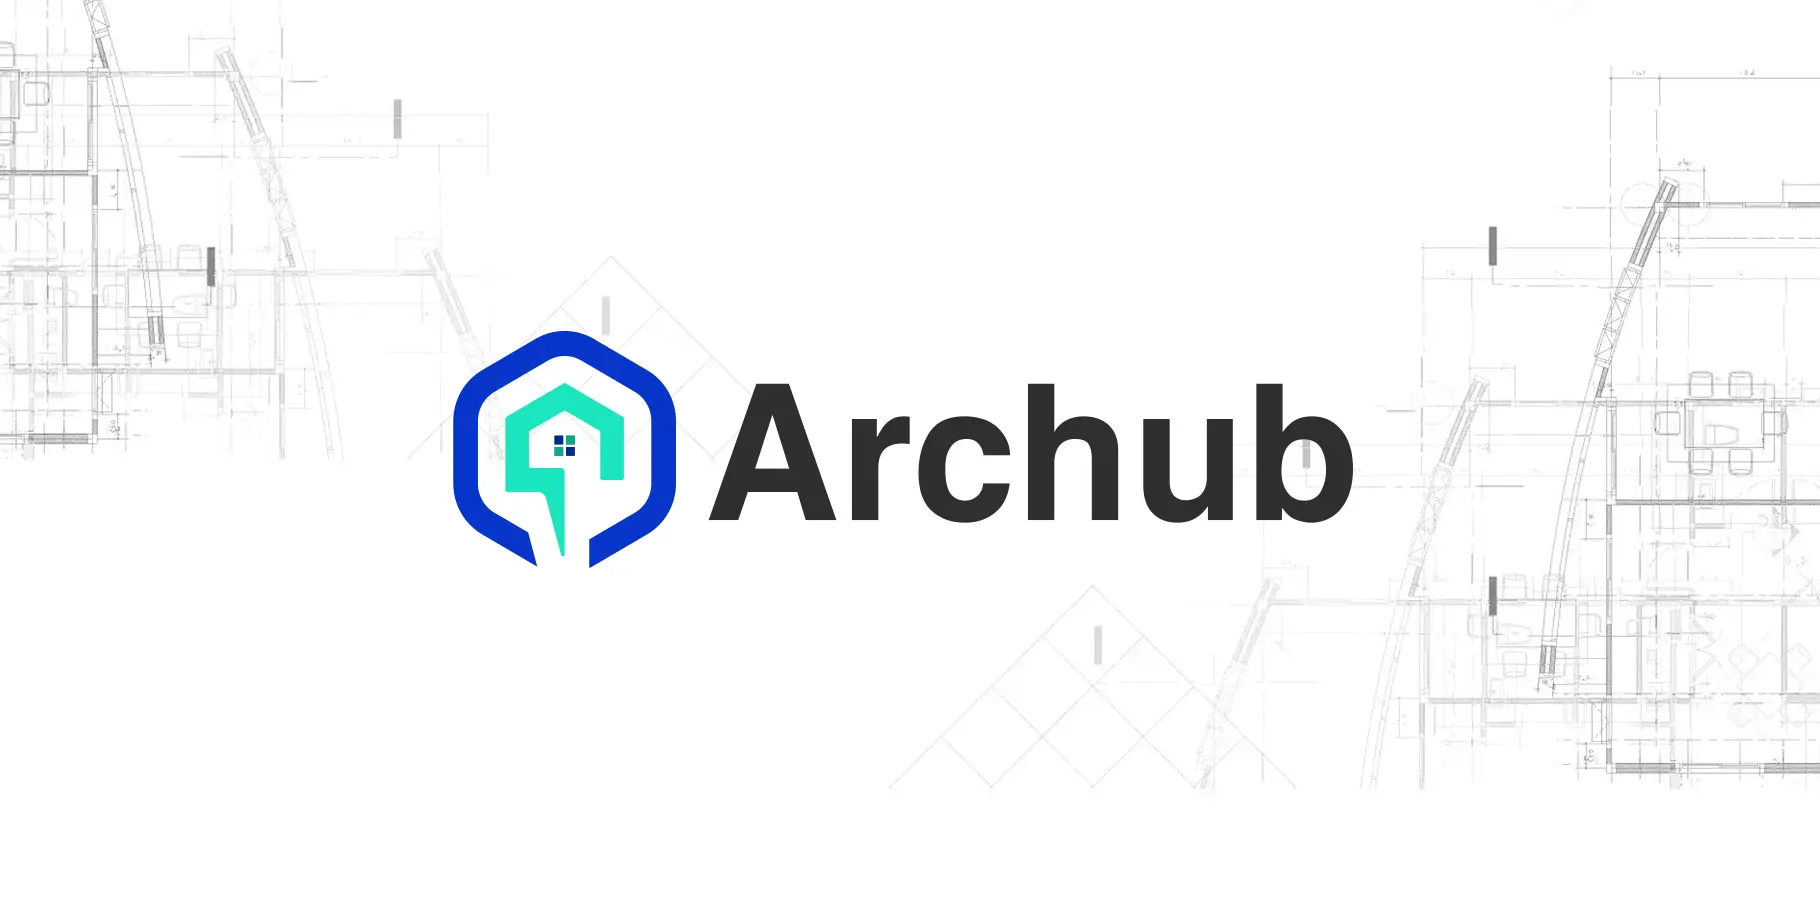 Archub Logo & Branding